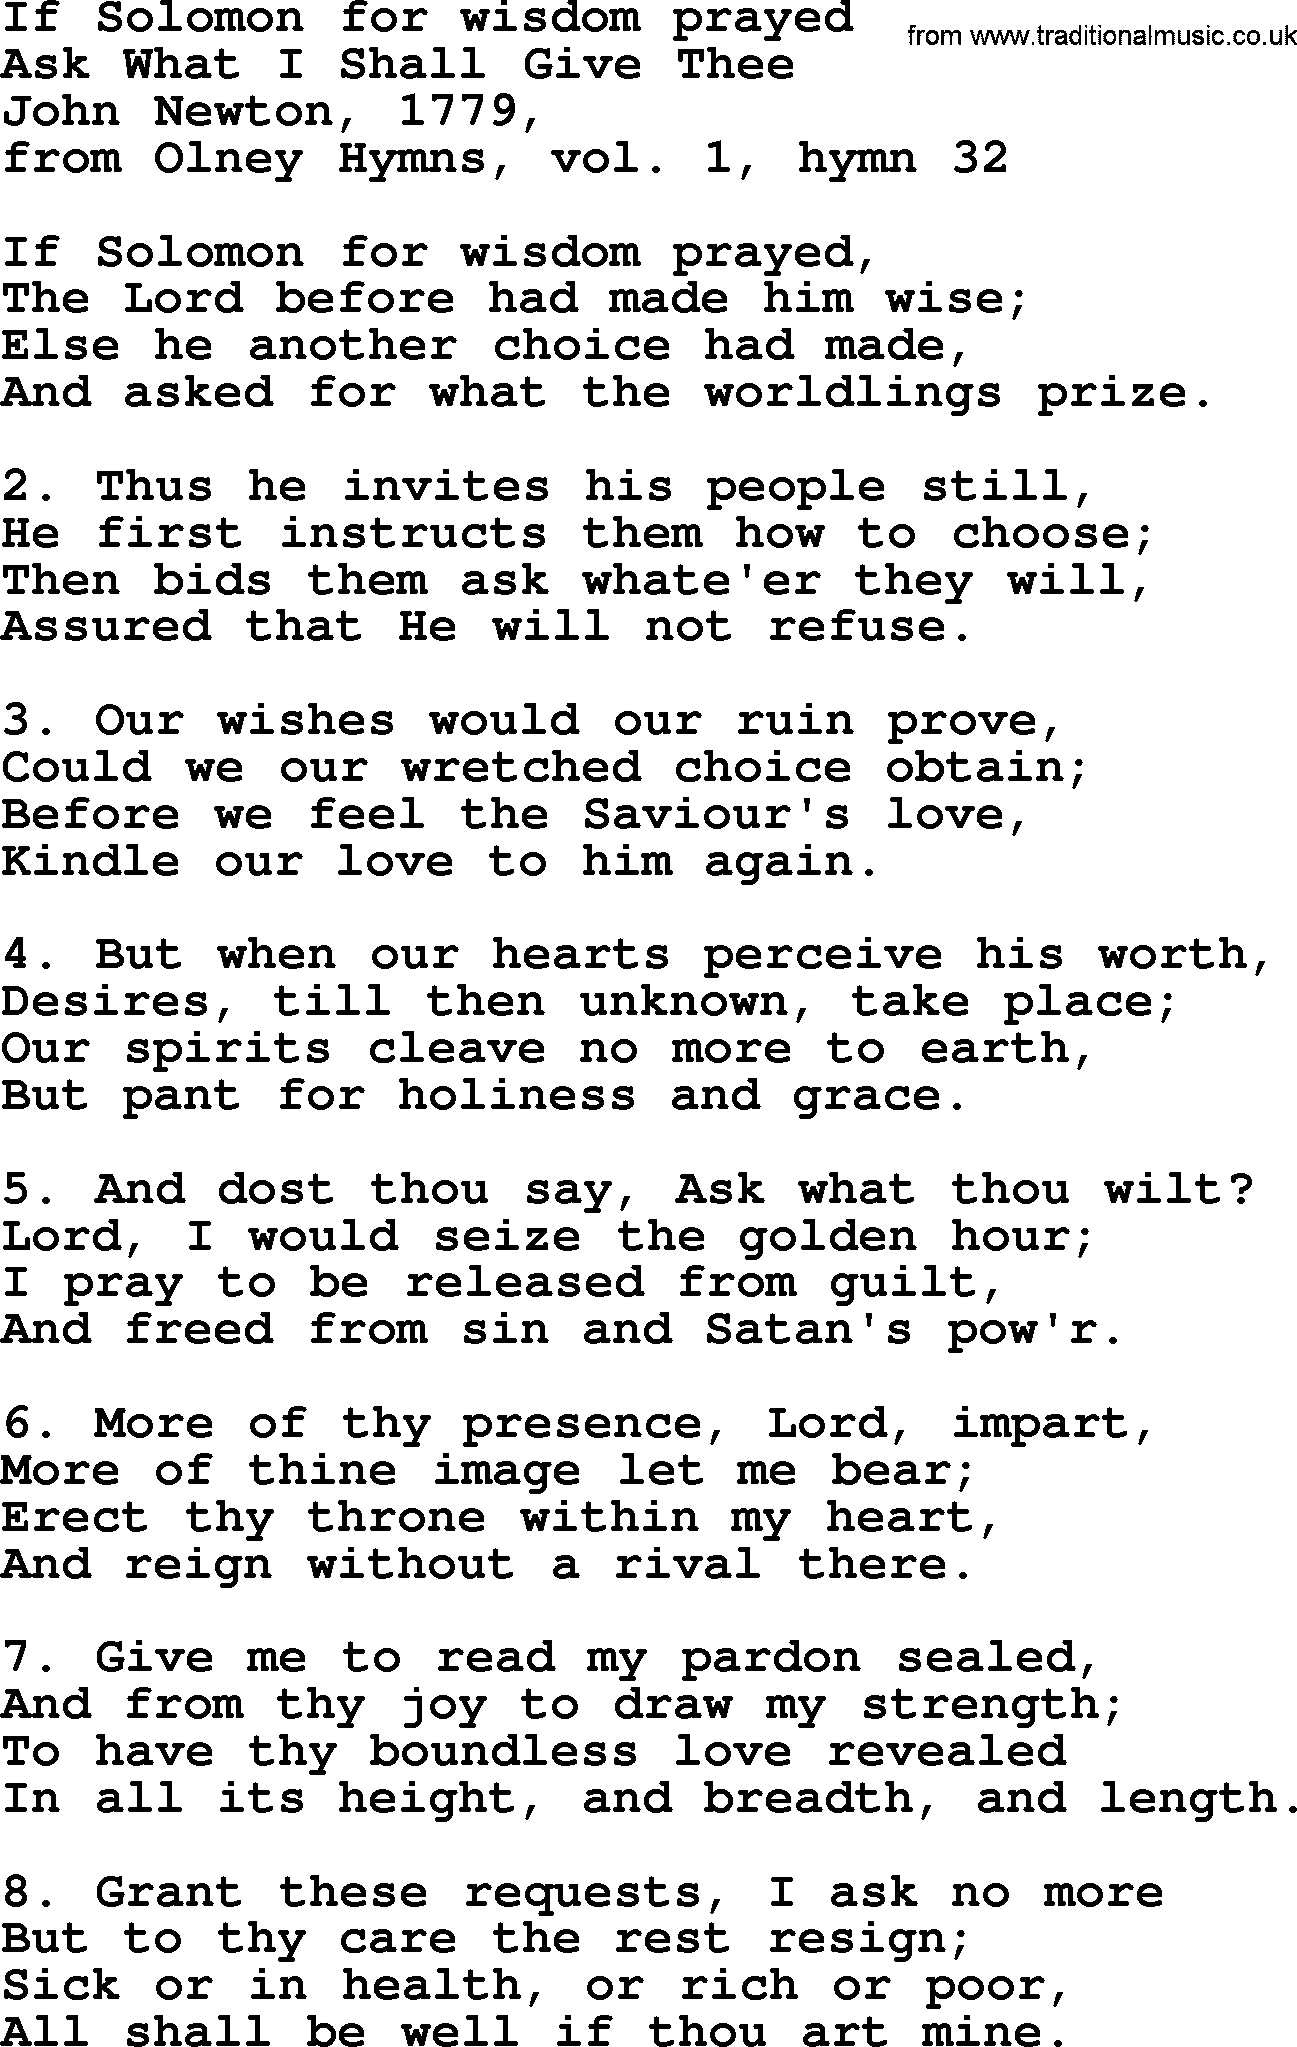 John Newton hymn: If Solomon For Wisdom Prayed, lyrics